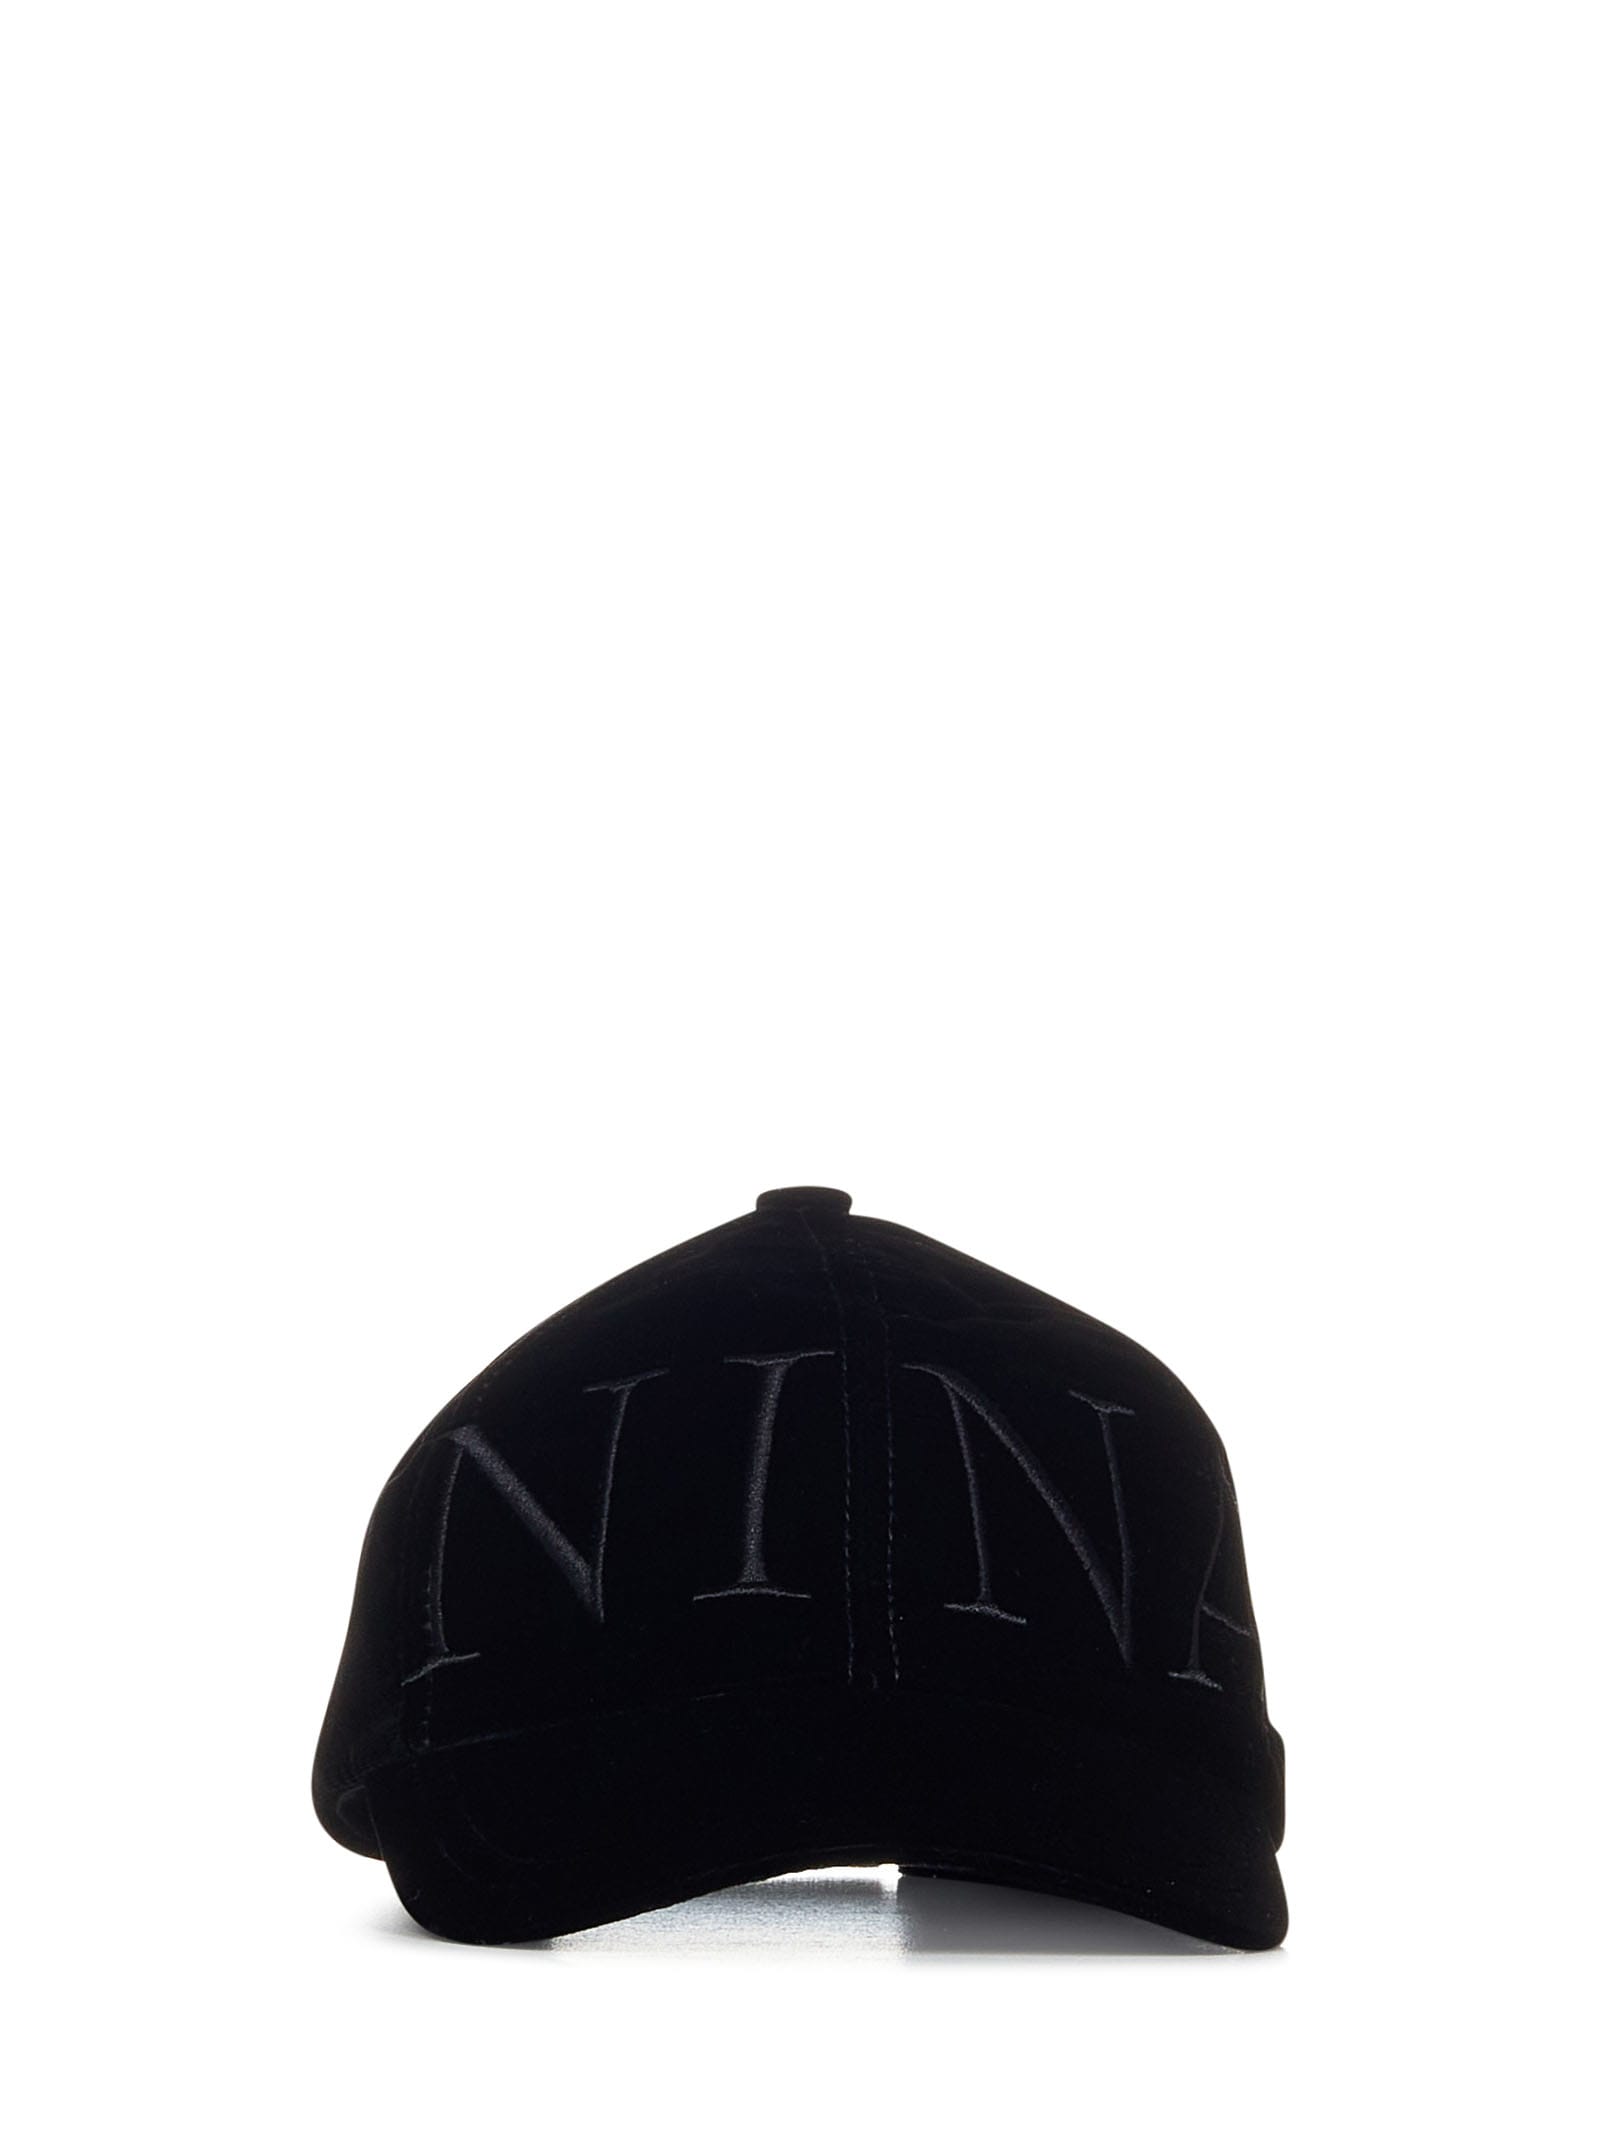 Nina Ricci Hat